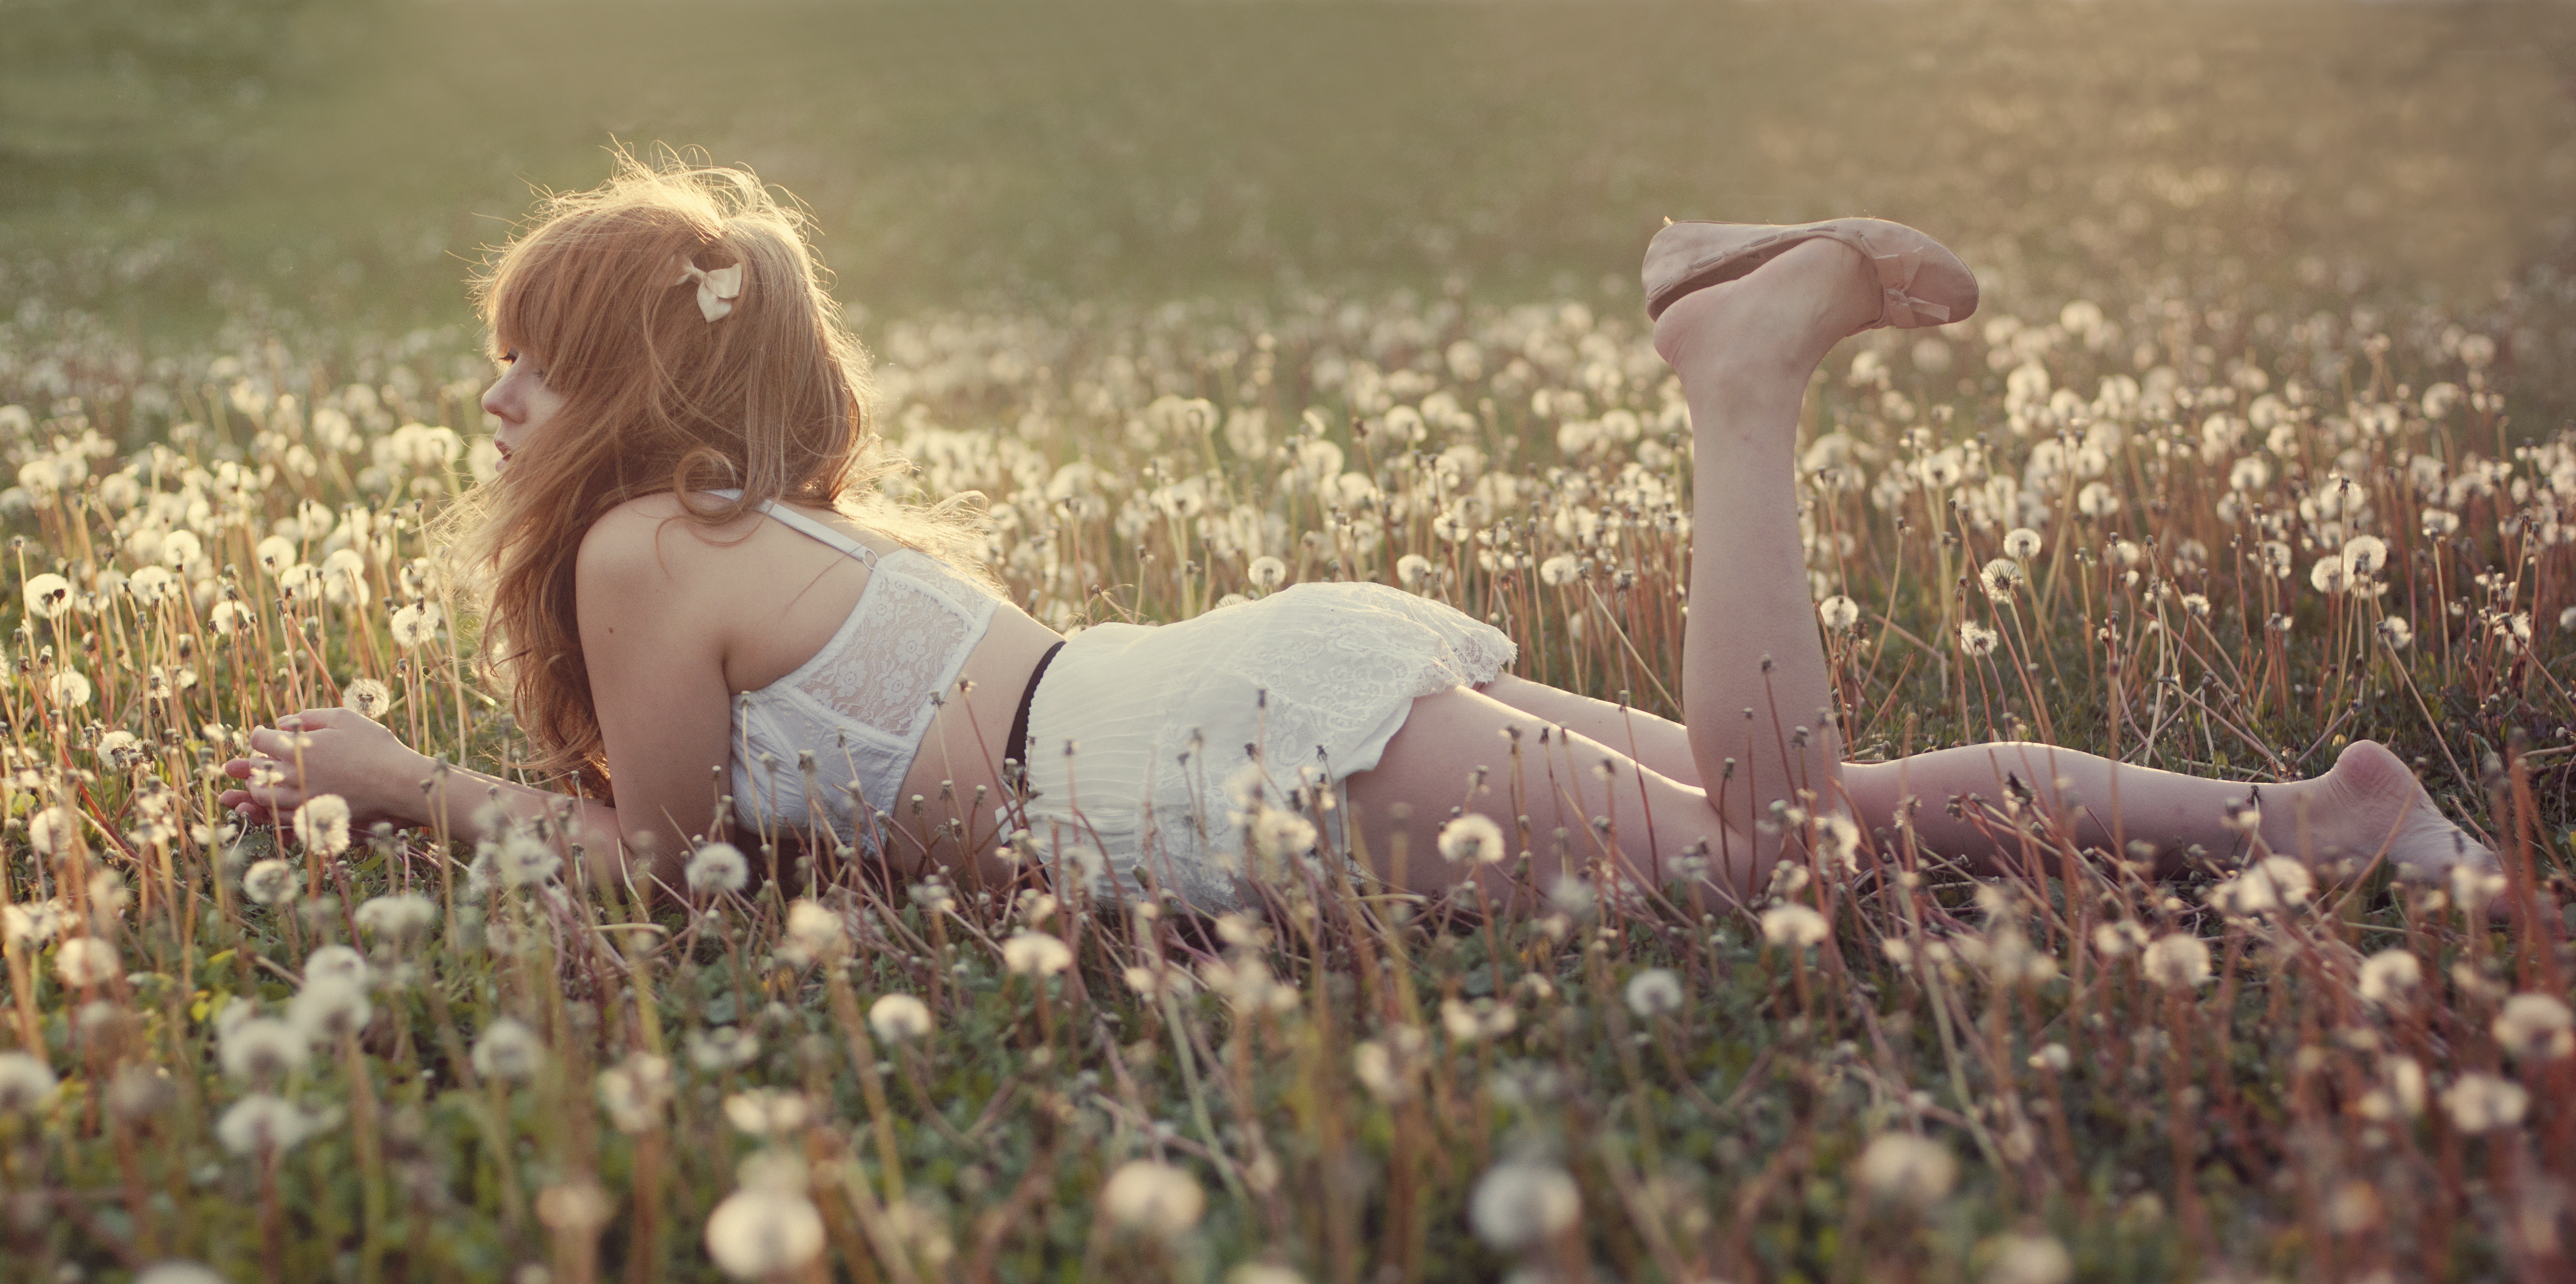 Free photo A girl in a field of dandelions